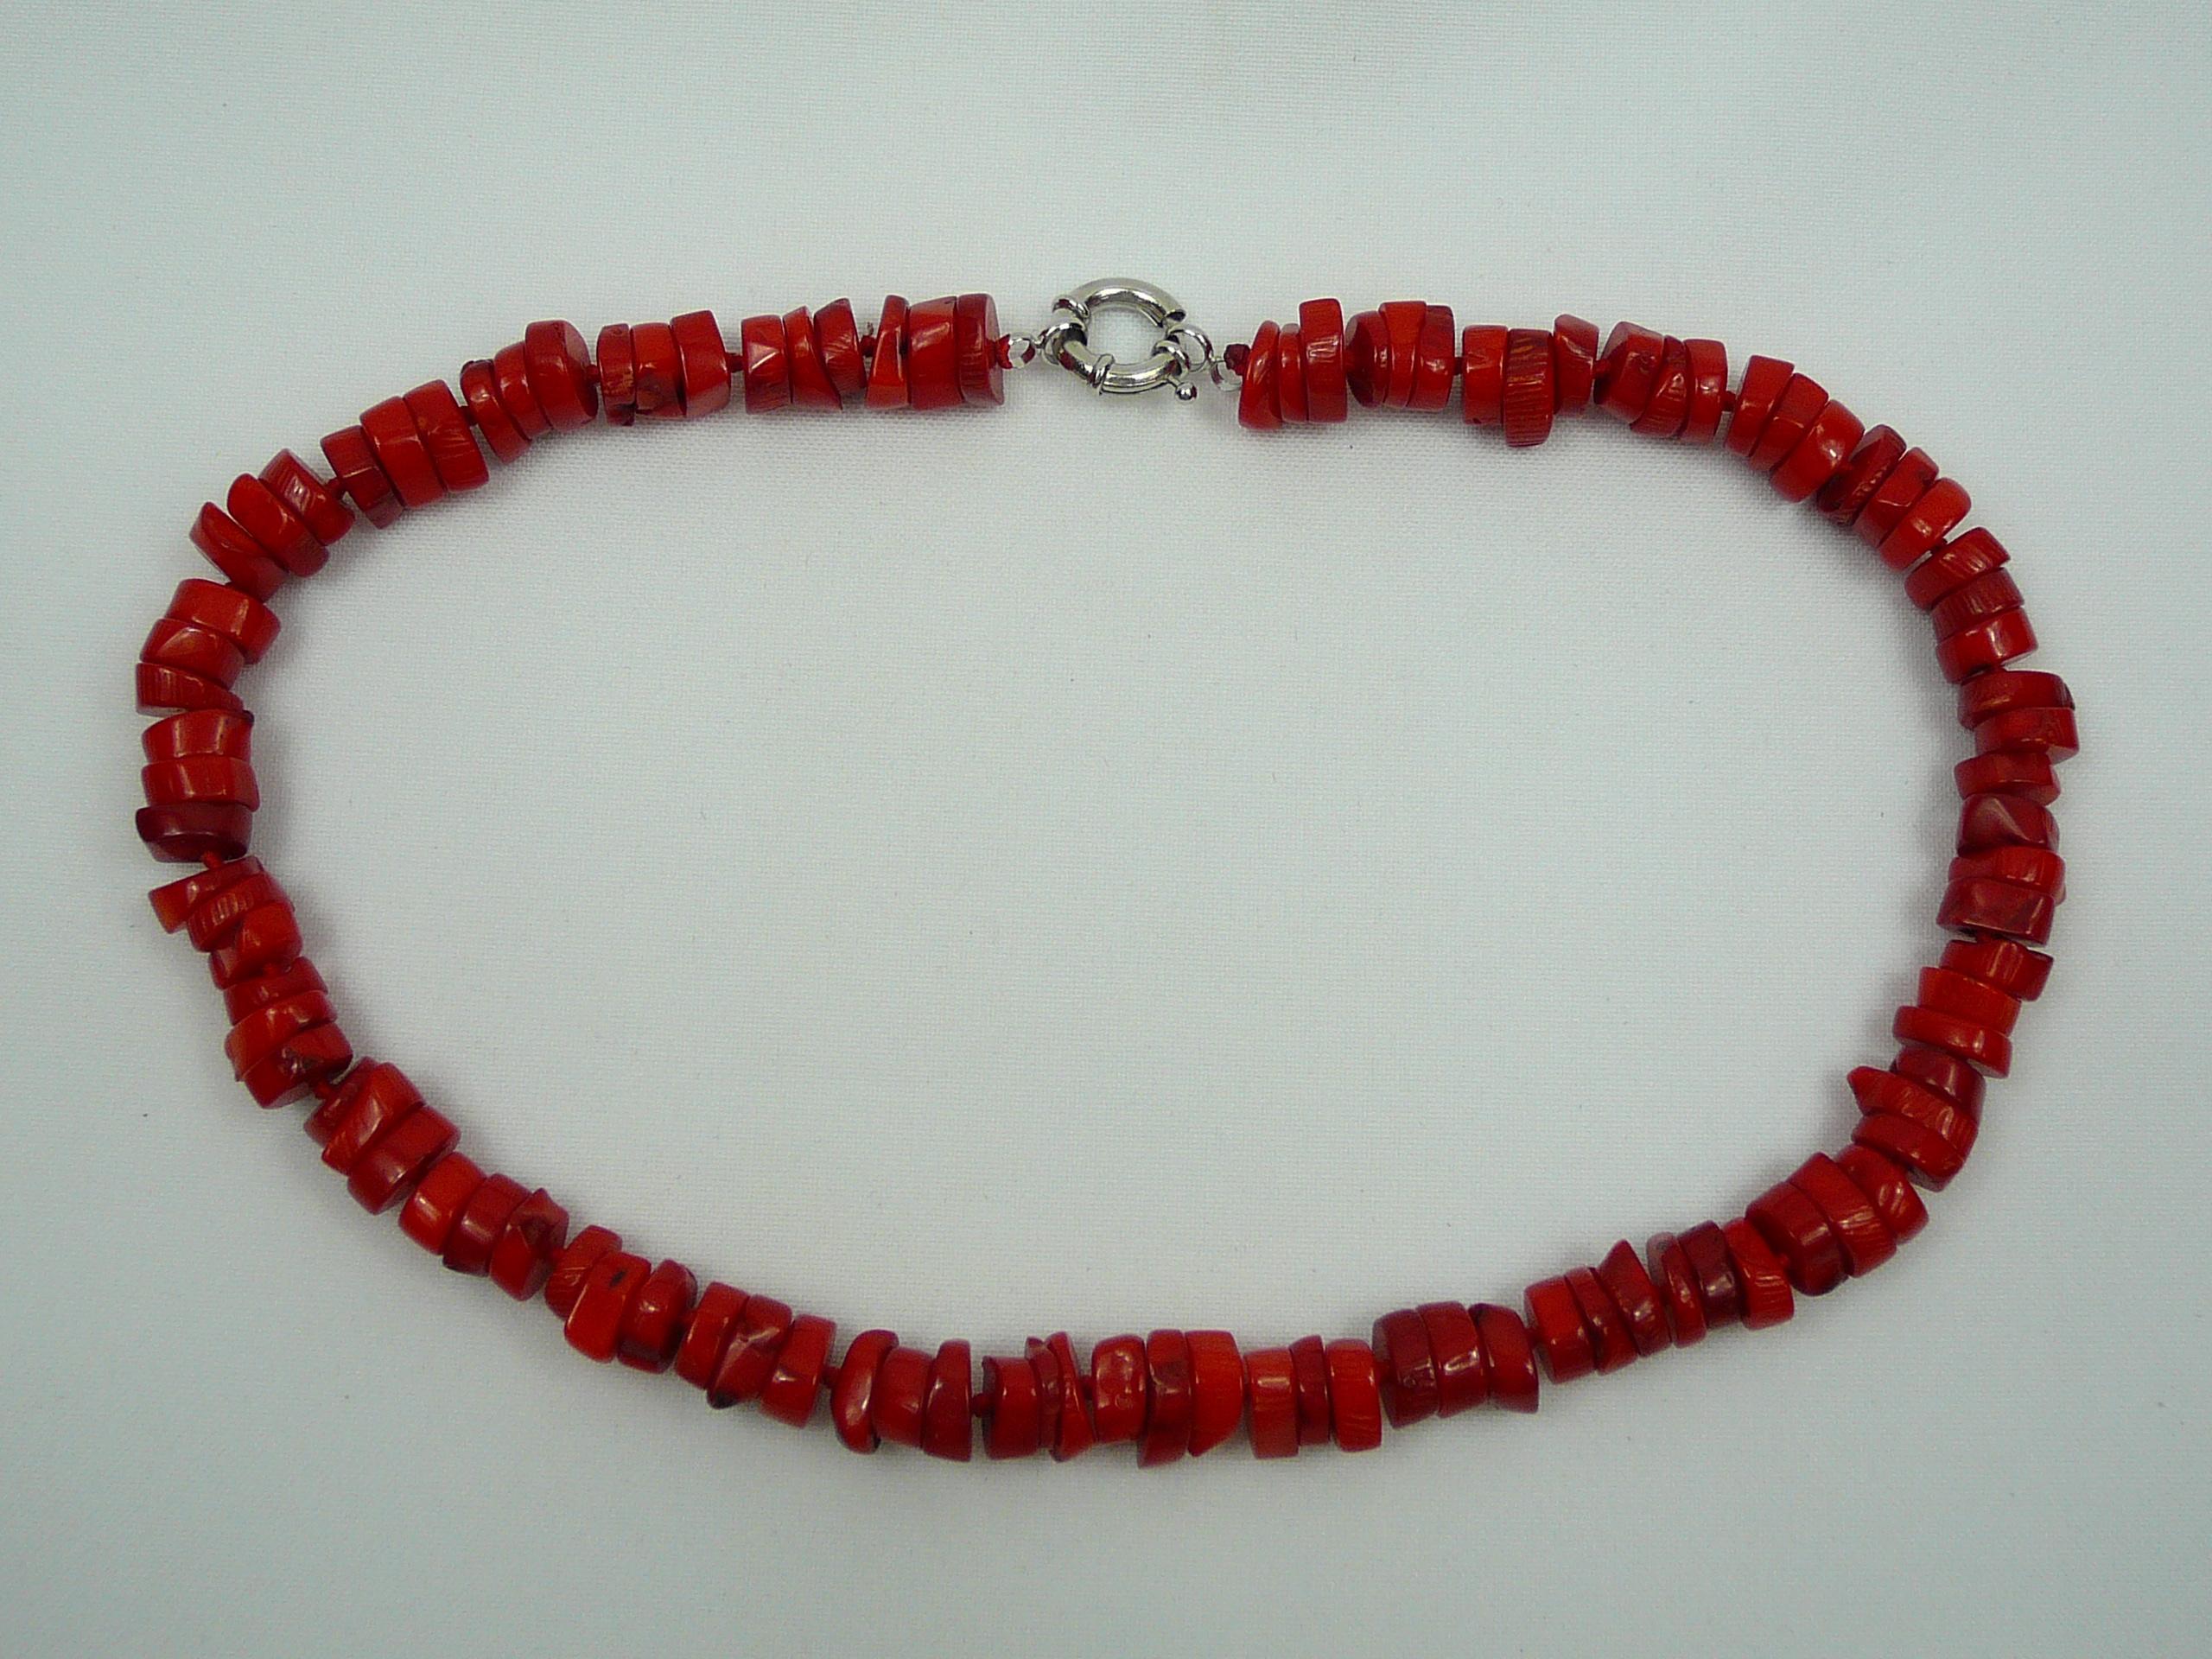 Heavy coral bead necklace